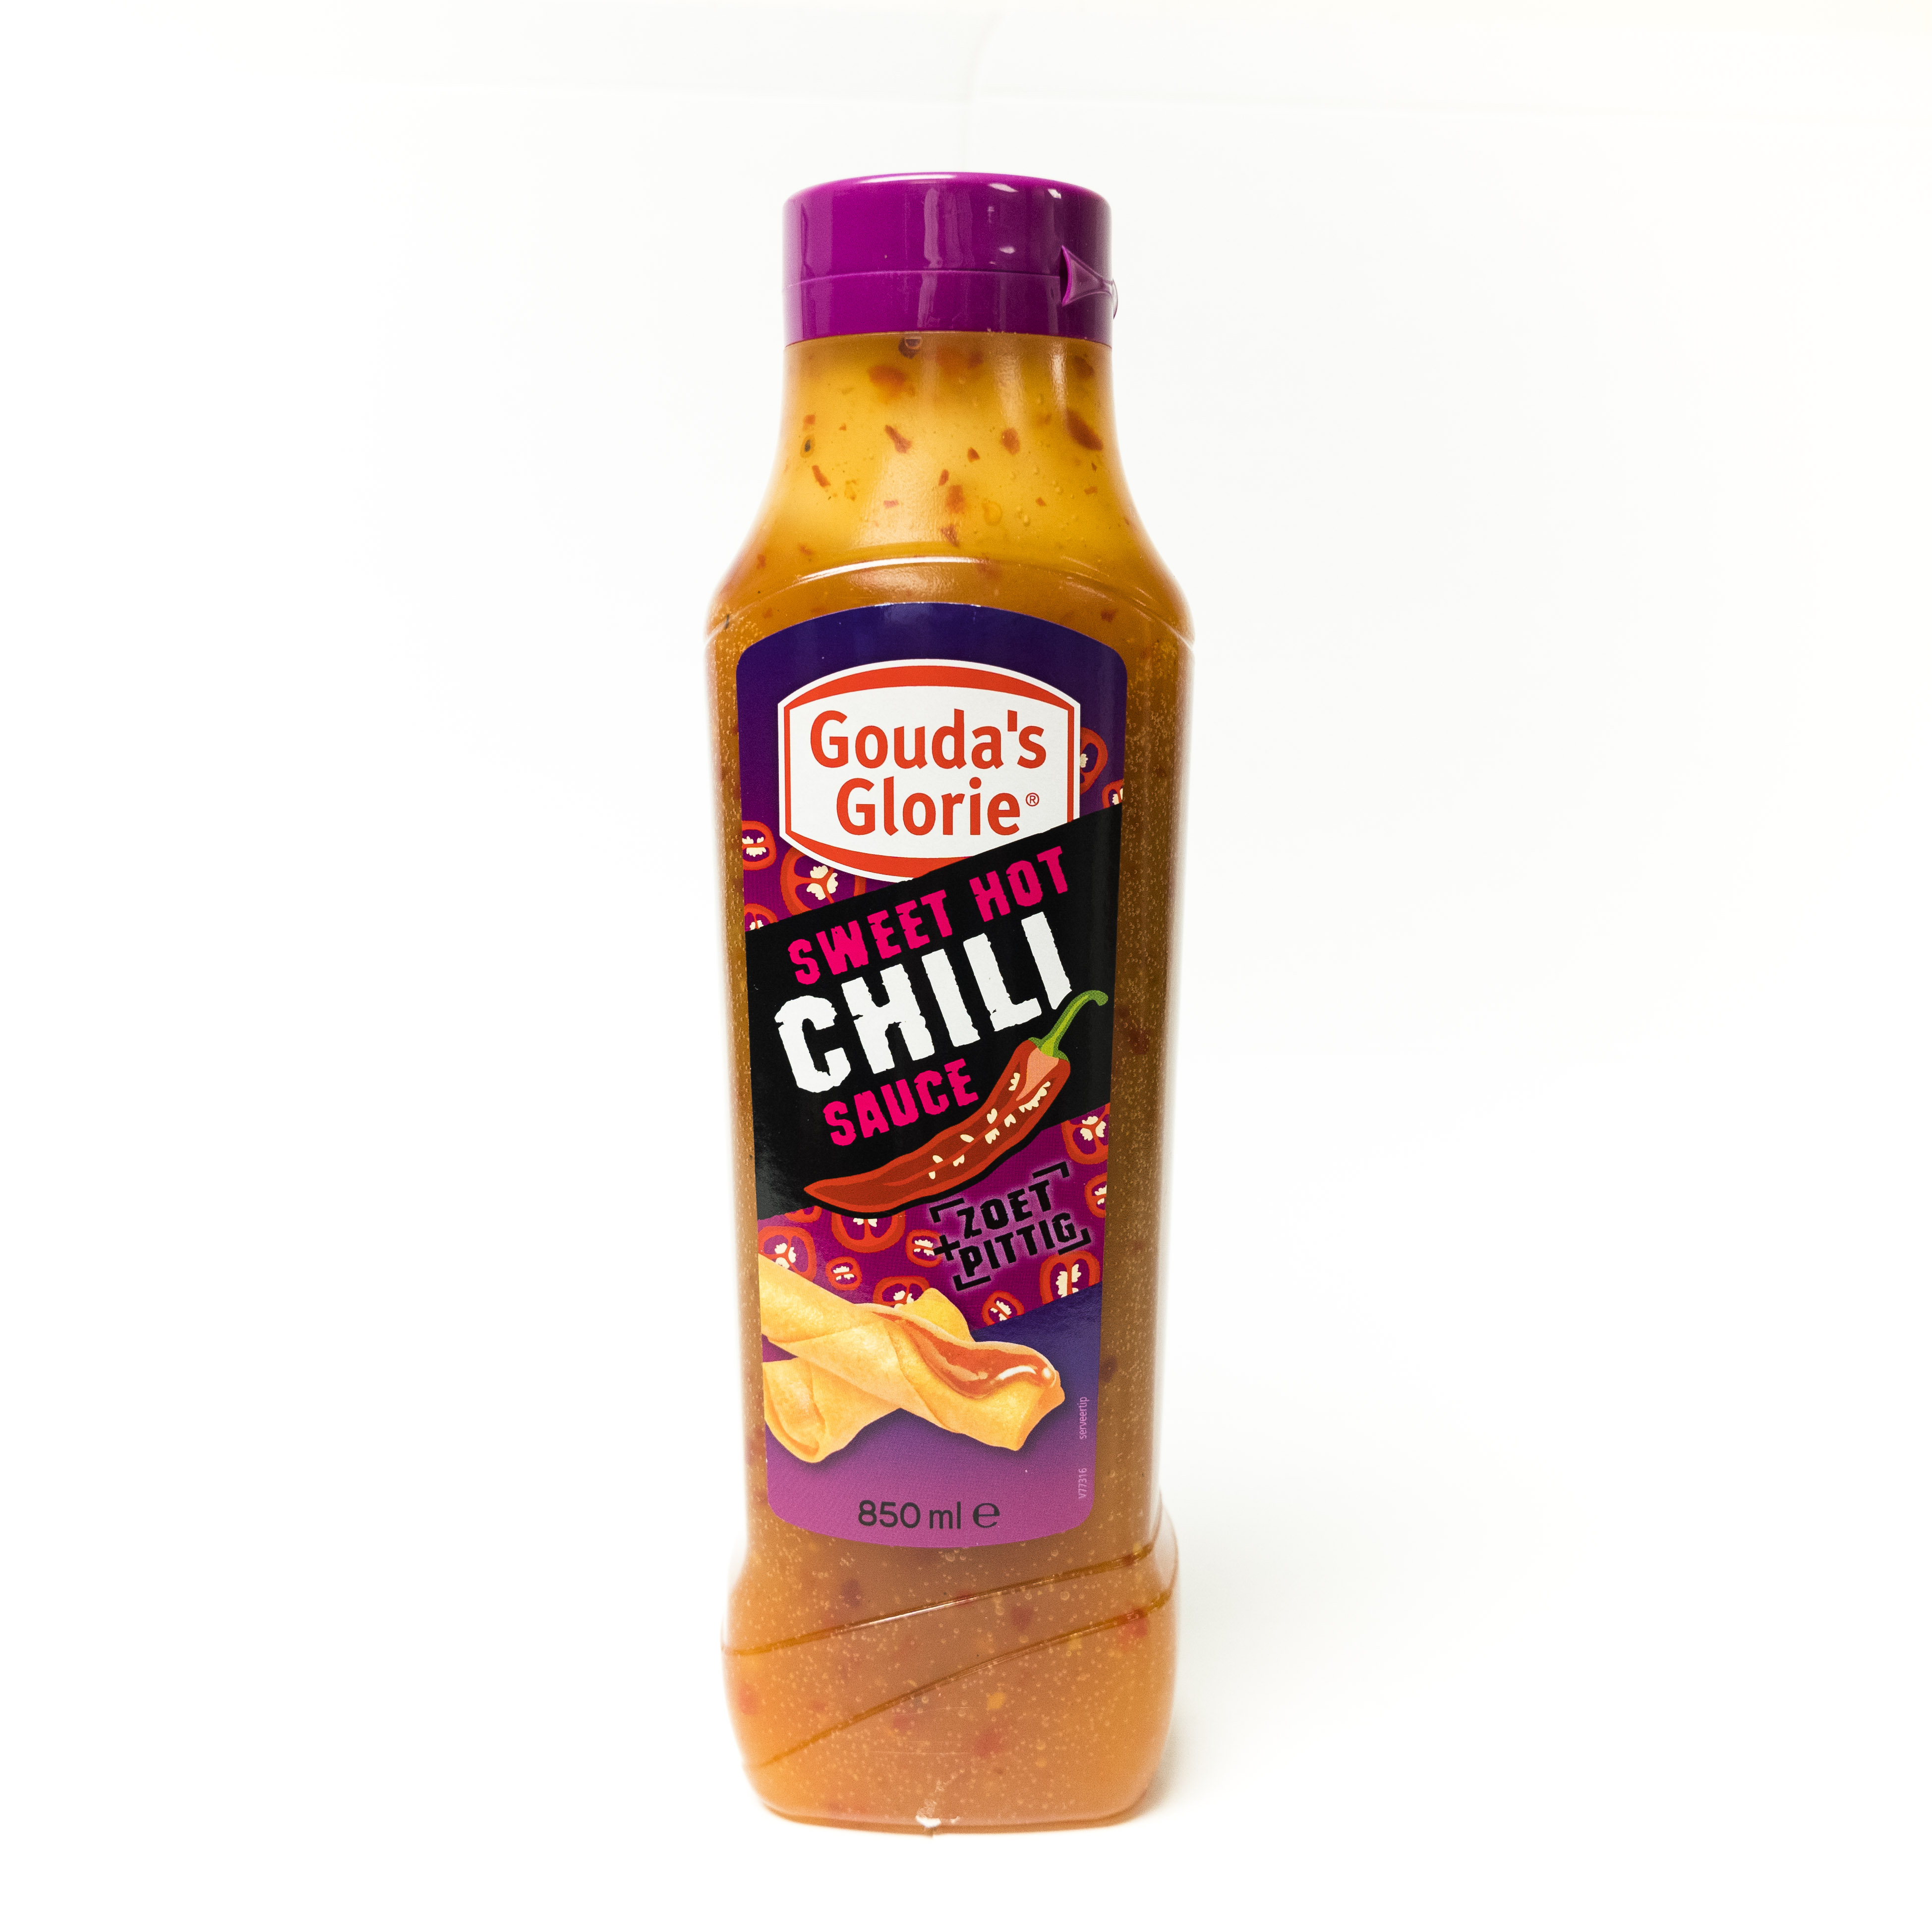 Gouda's Glorie Sweet Hot Chili Sauce